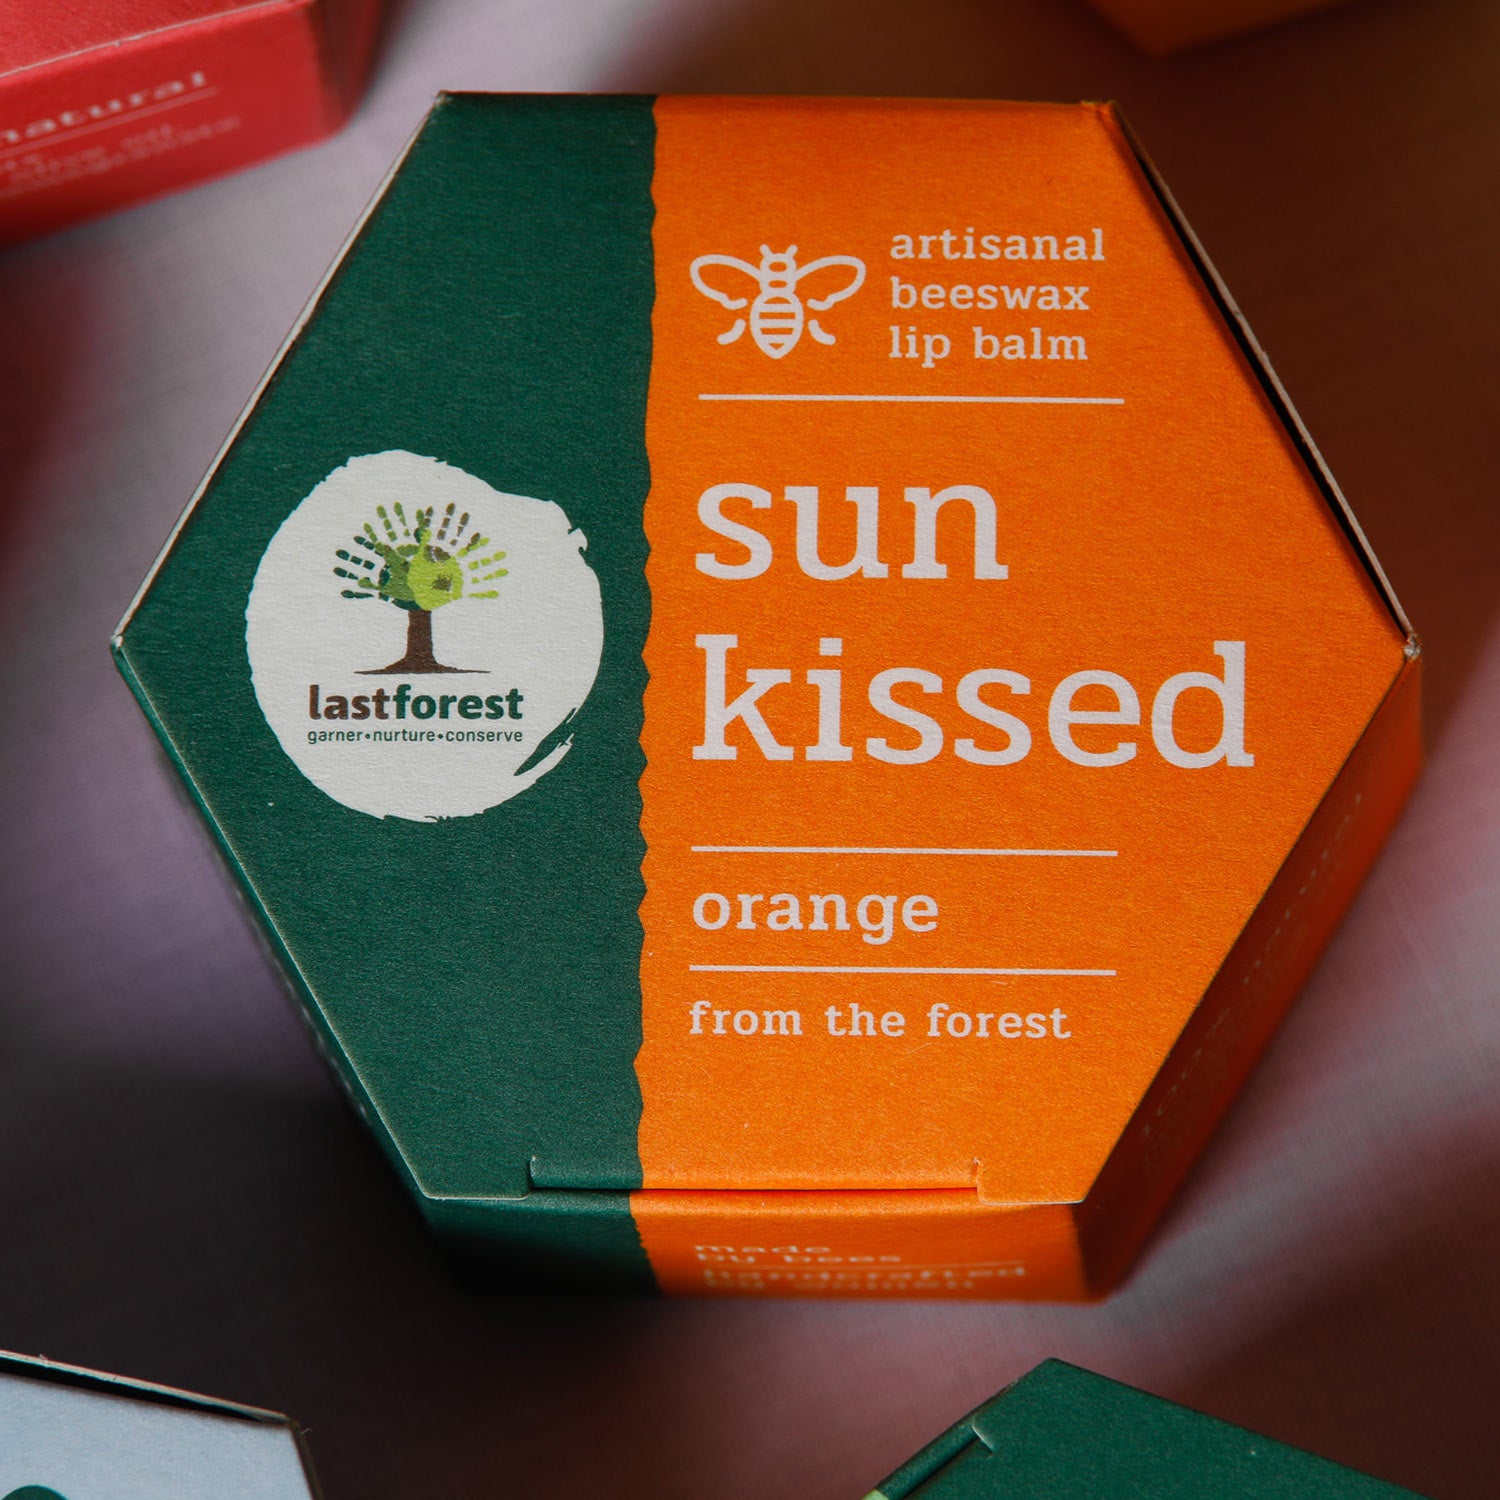 Last Forest Artisanal, Handmade Beeswax Lip Balm Orange